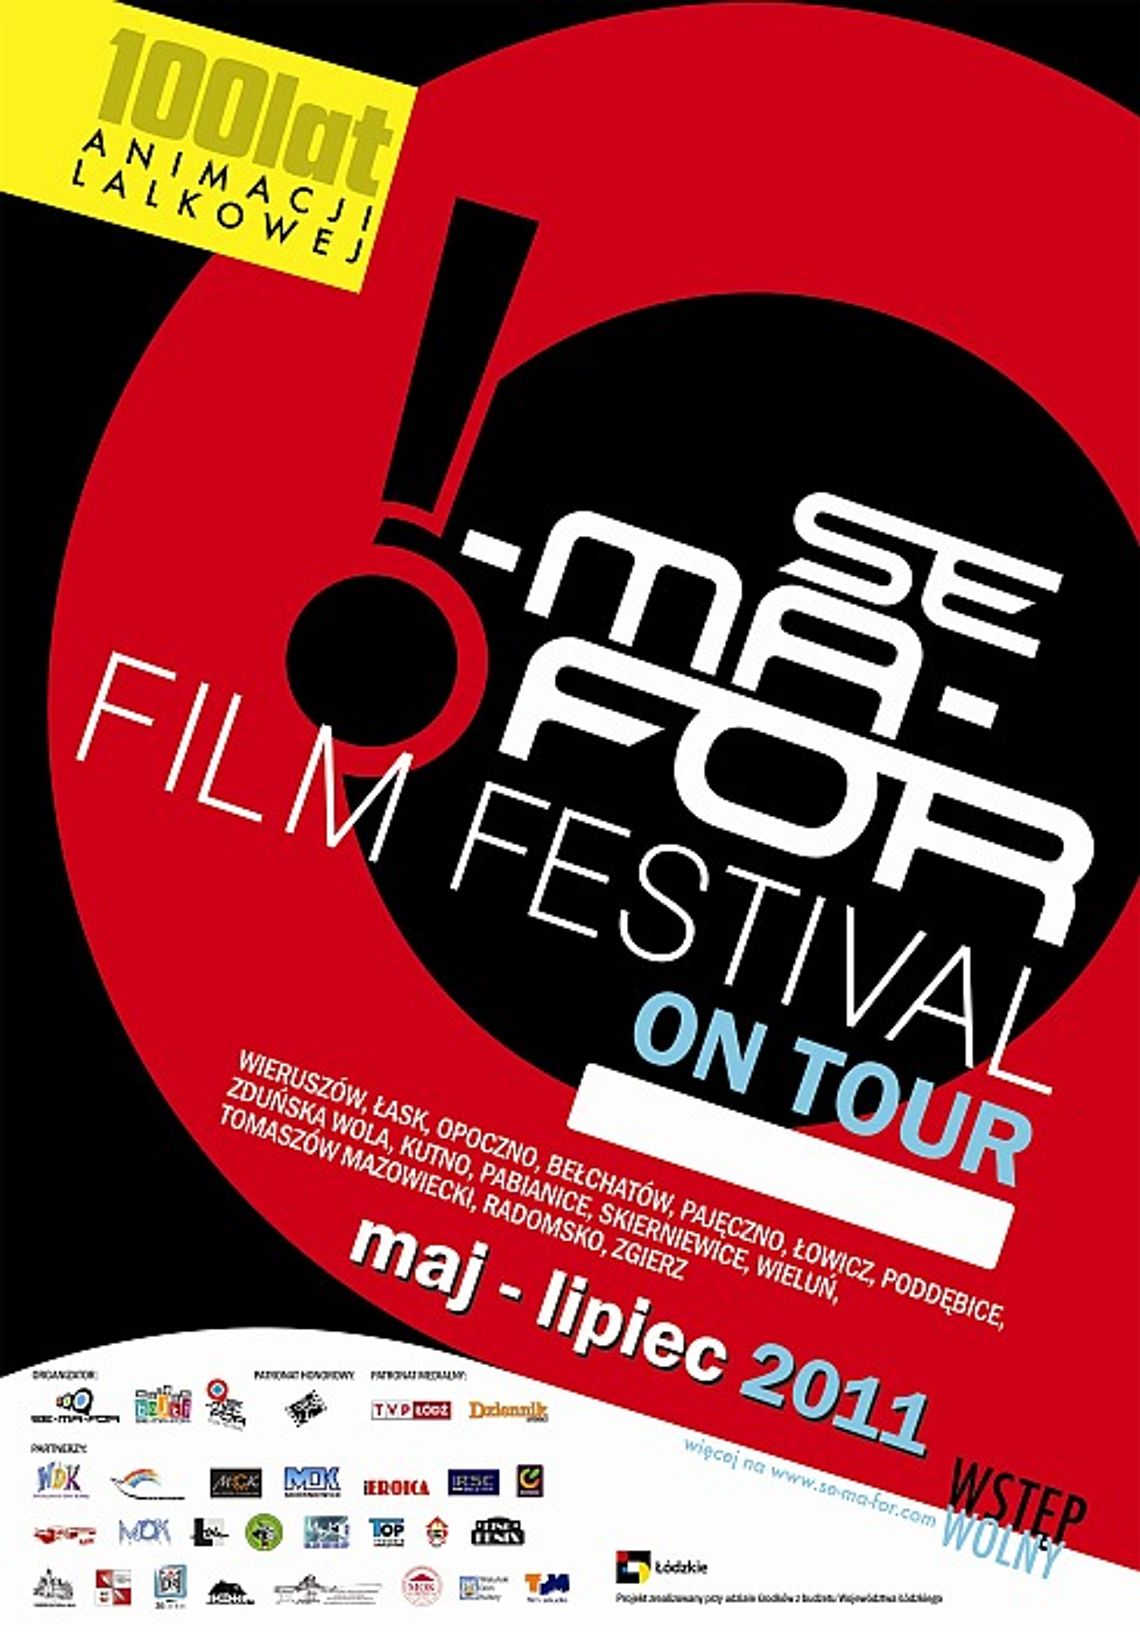 Se-ma-for Film Festival On Tour 2011